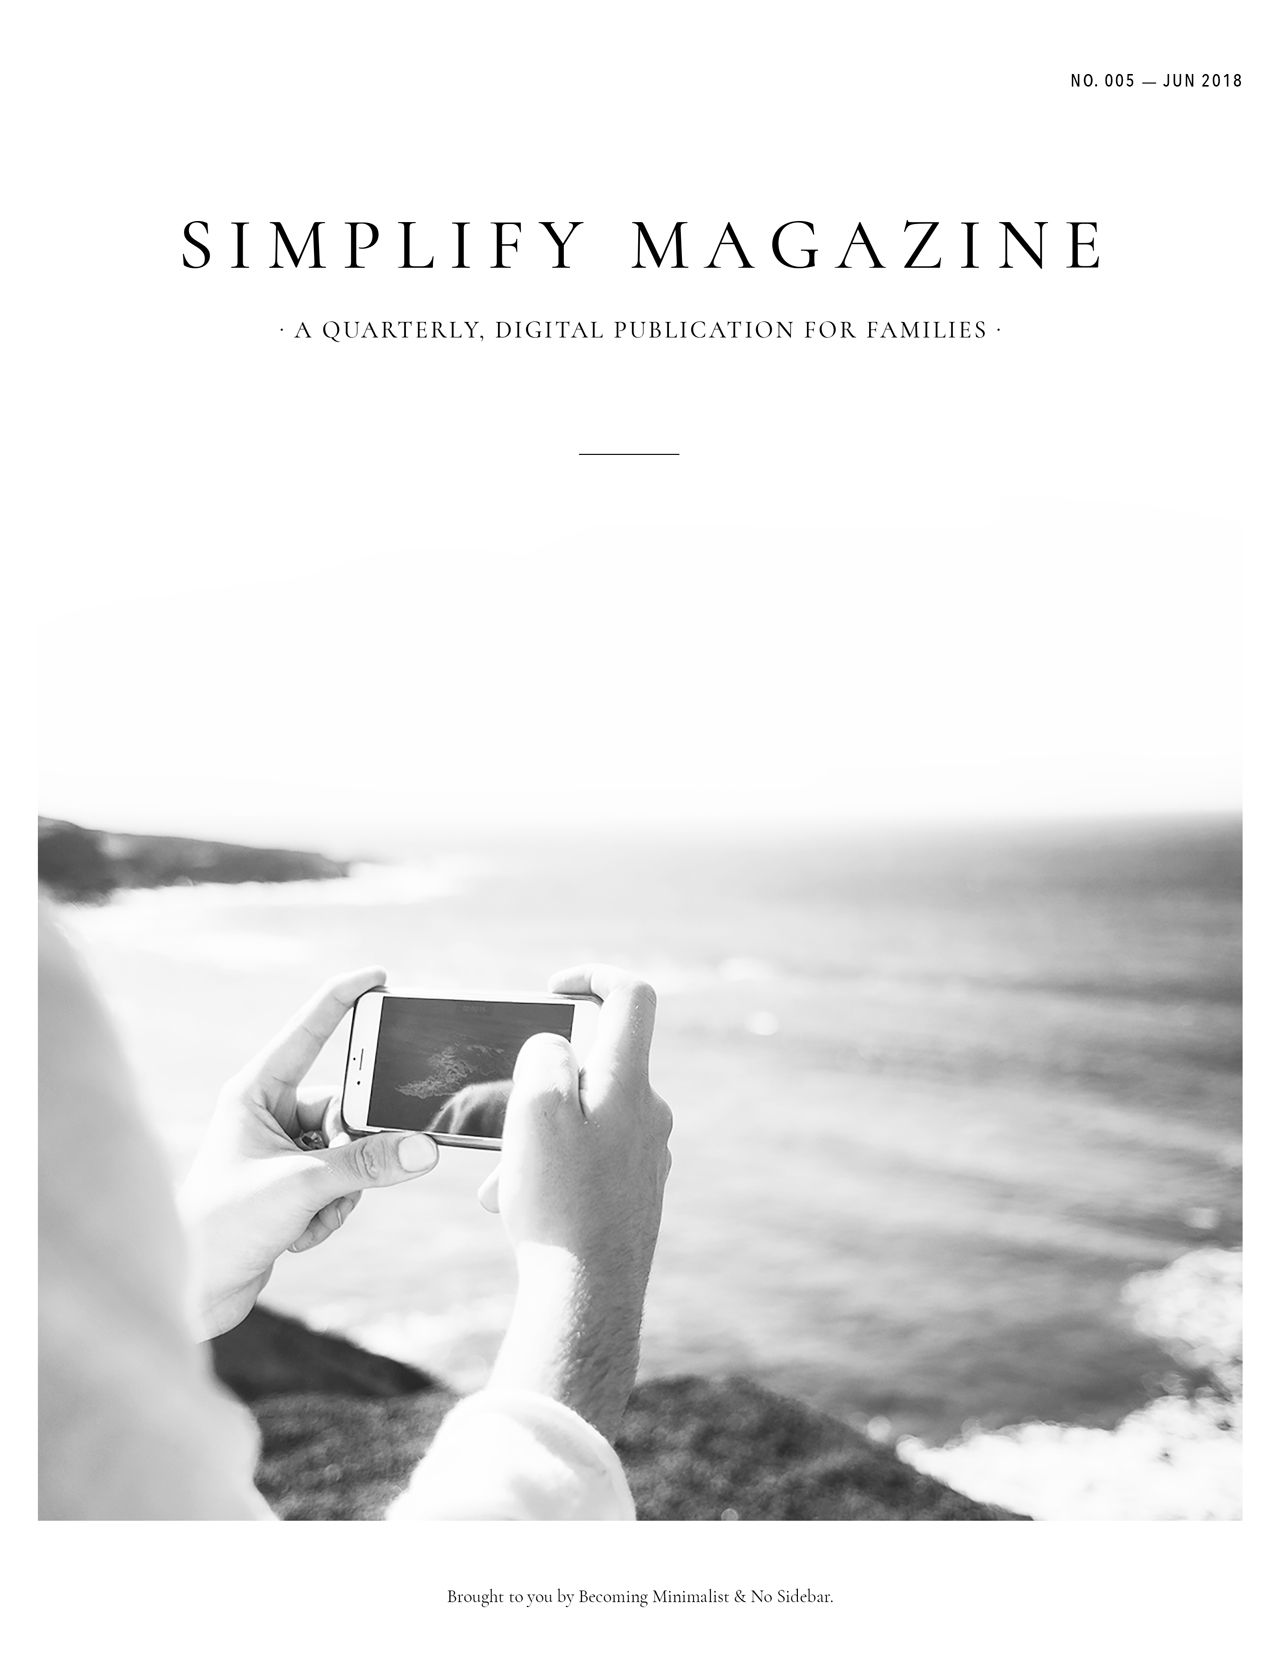 Simplify Magazine Issue #005